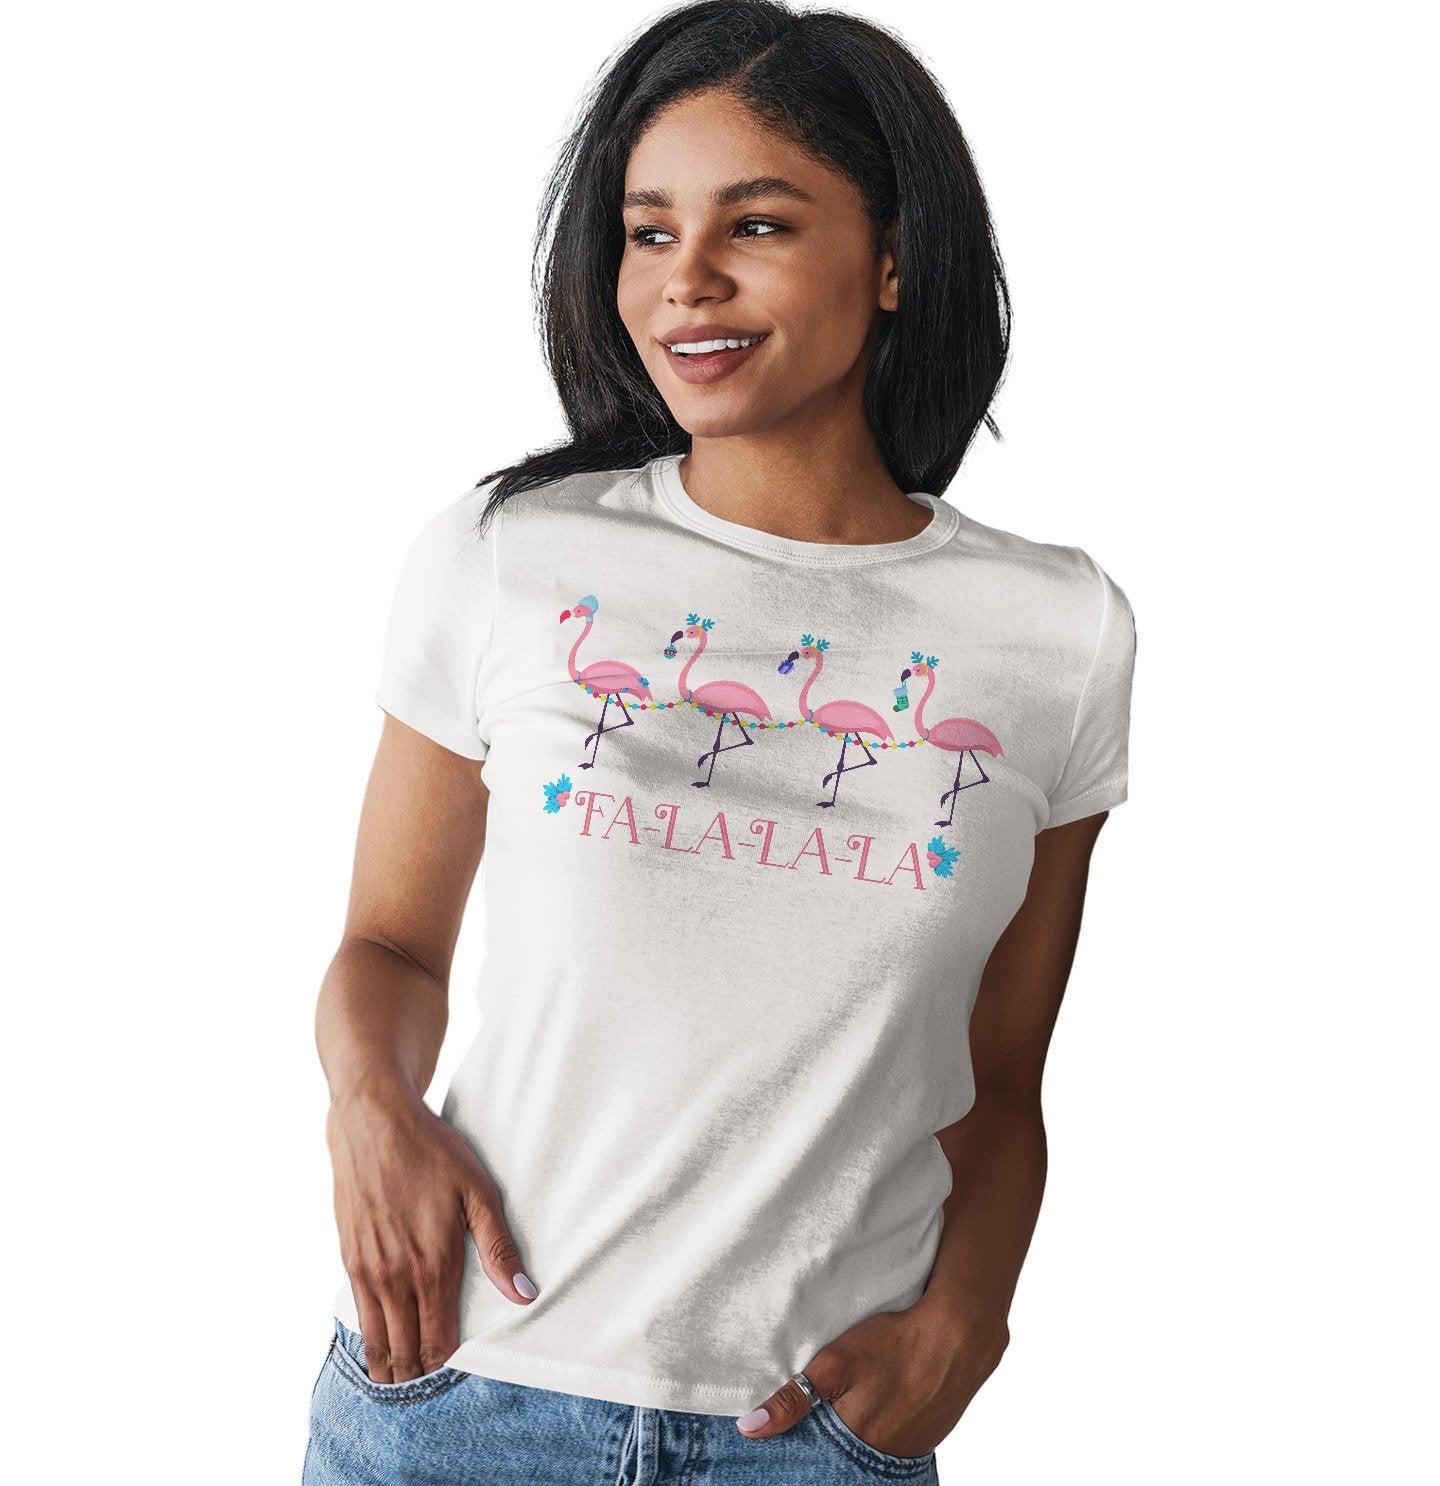 Falalamingos - Women's Fitted T-Shirt